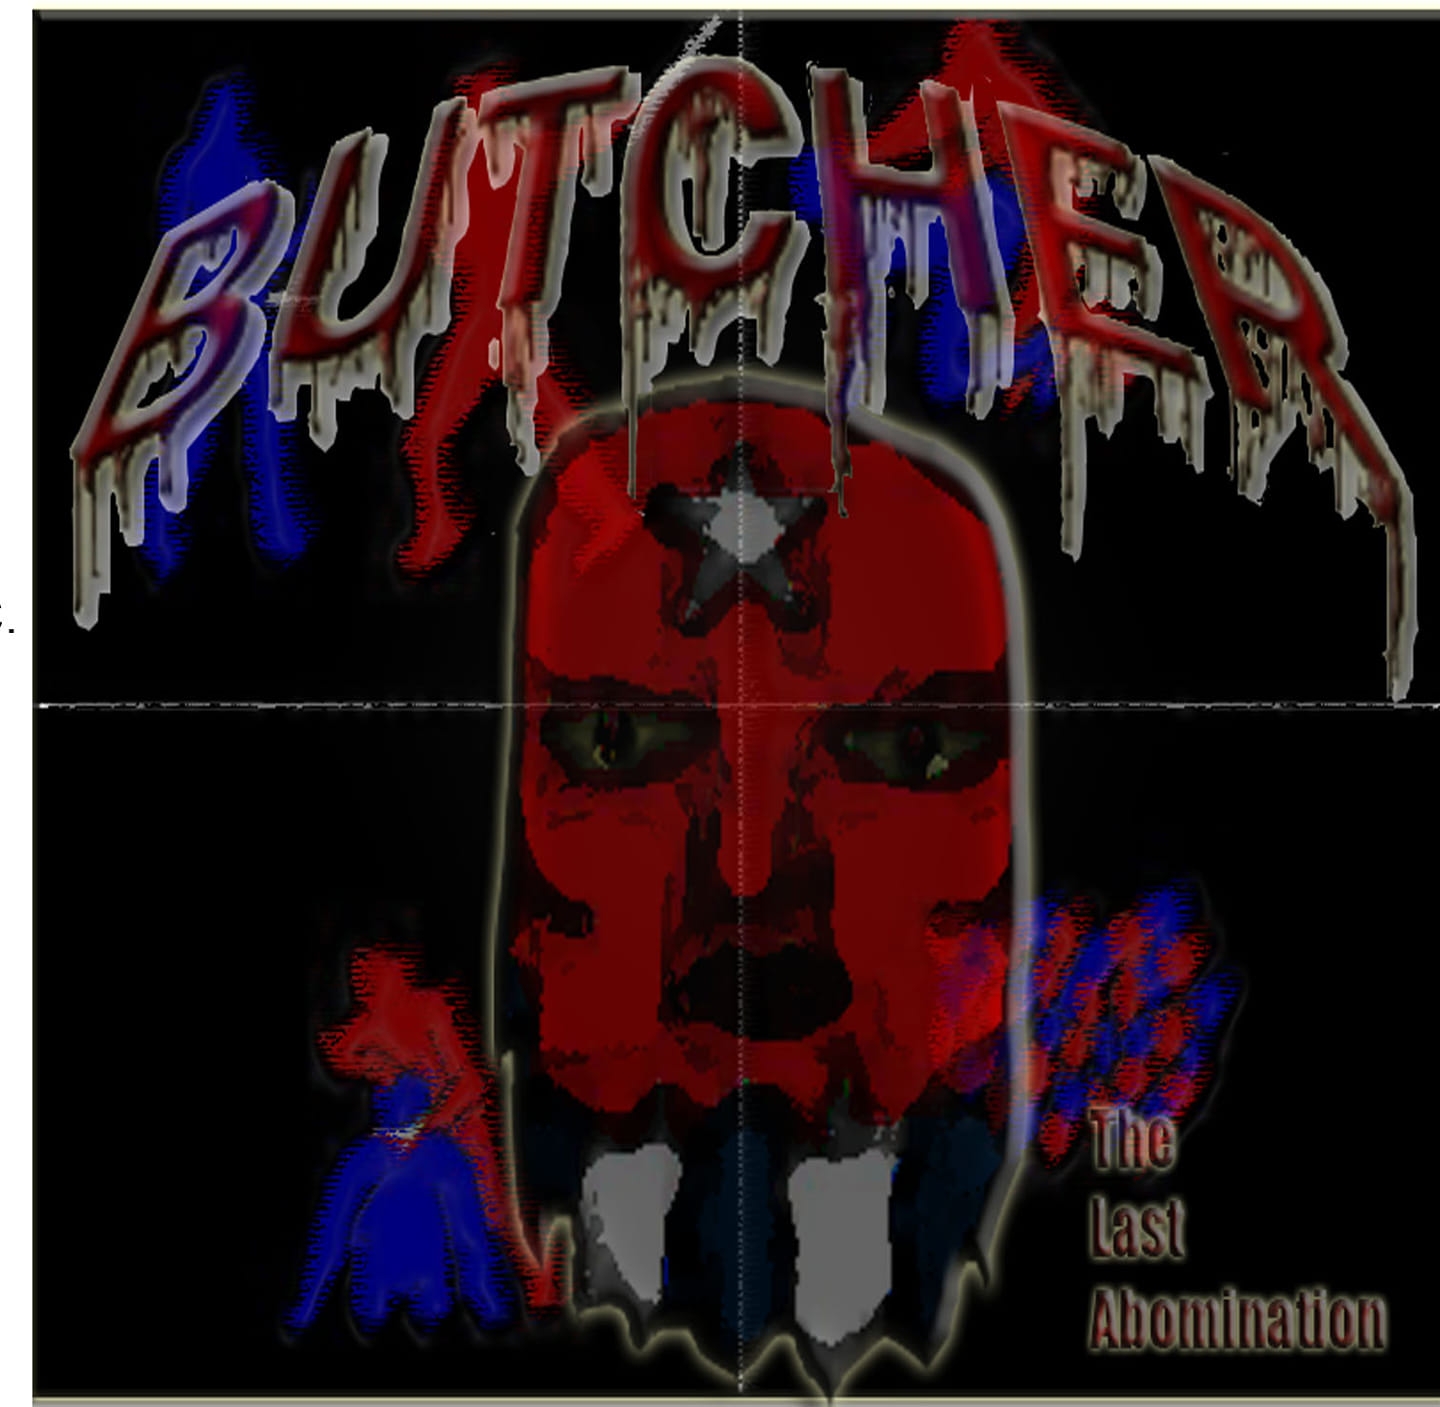 Butcher (Cuba)